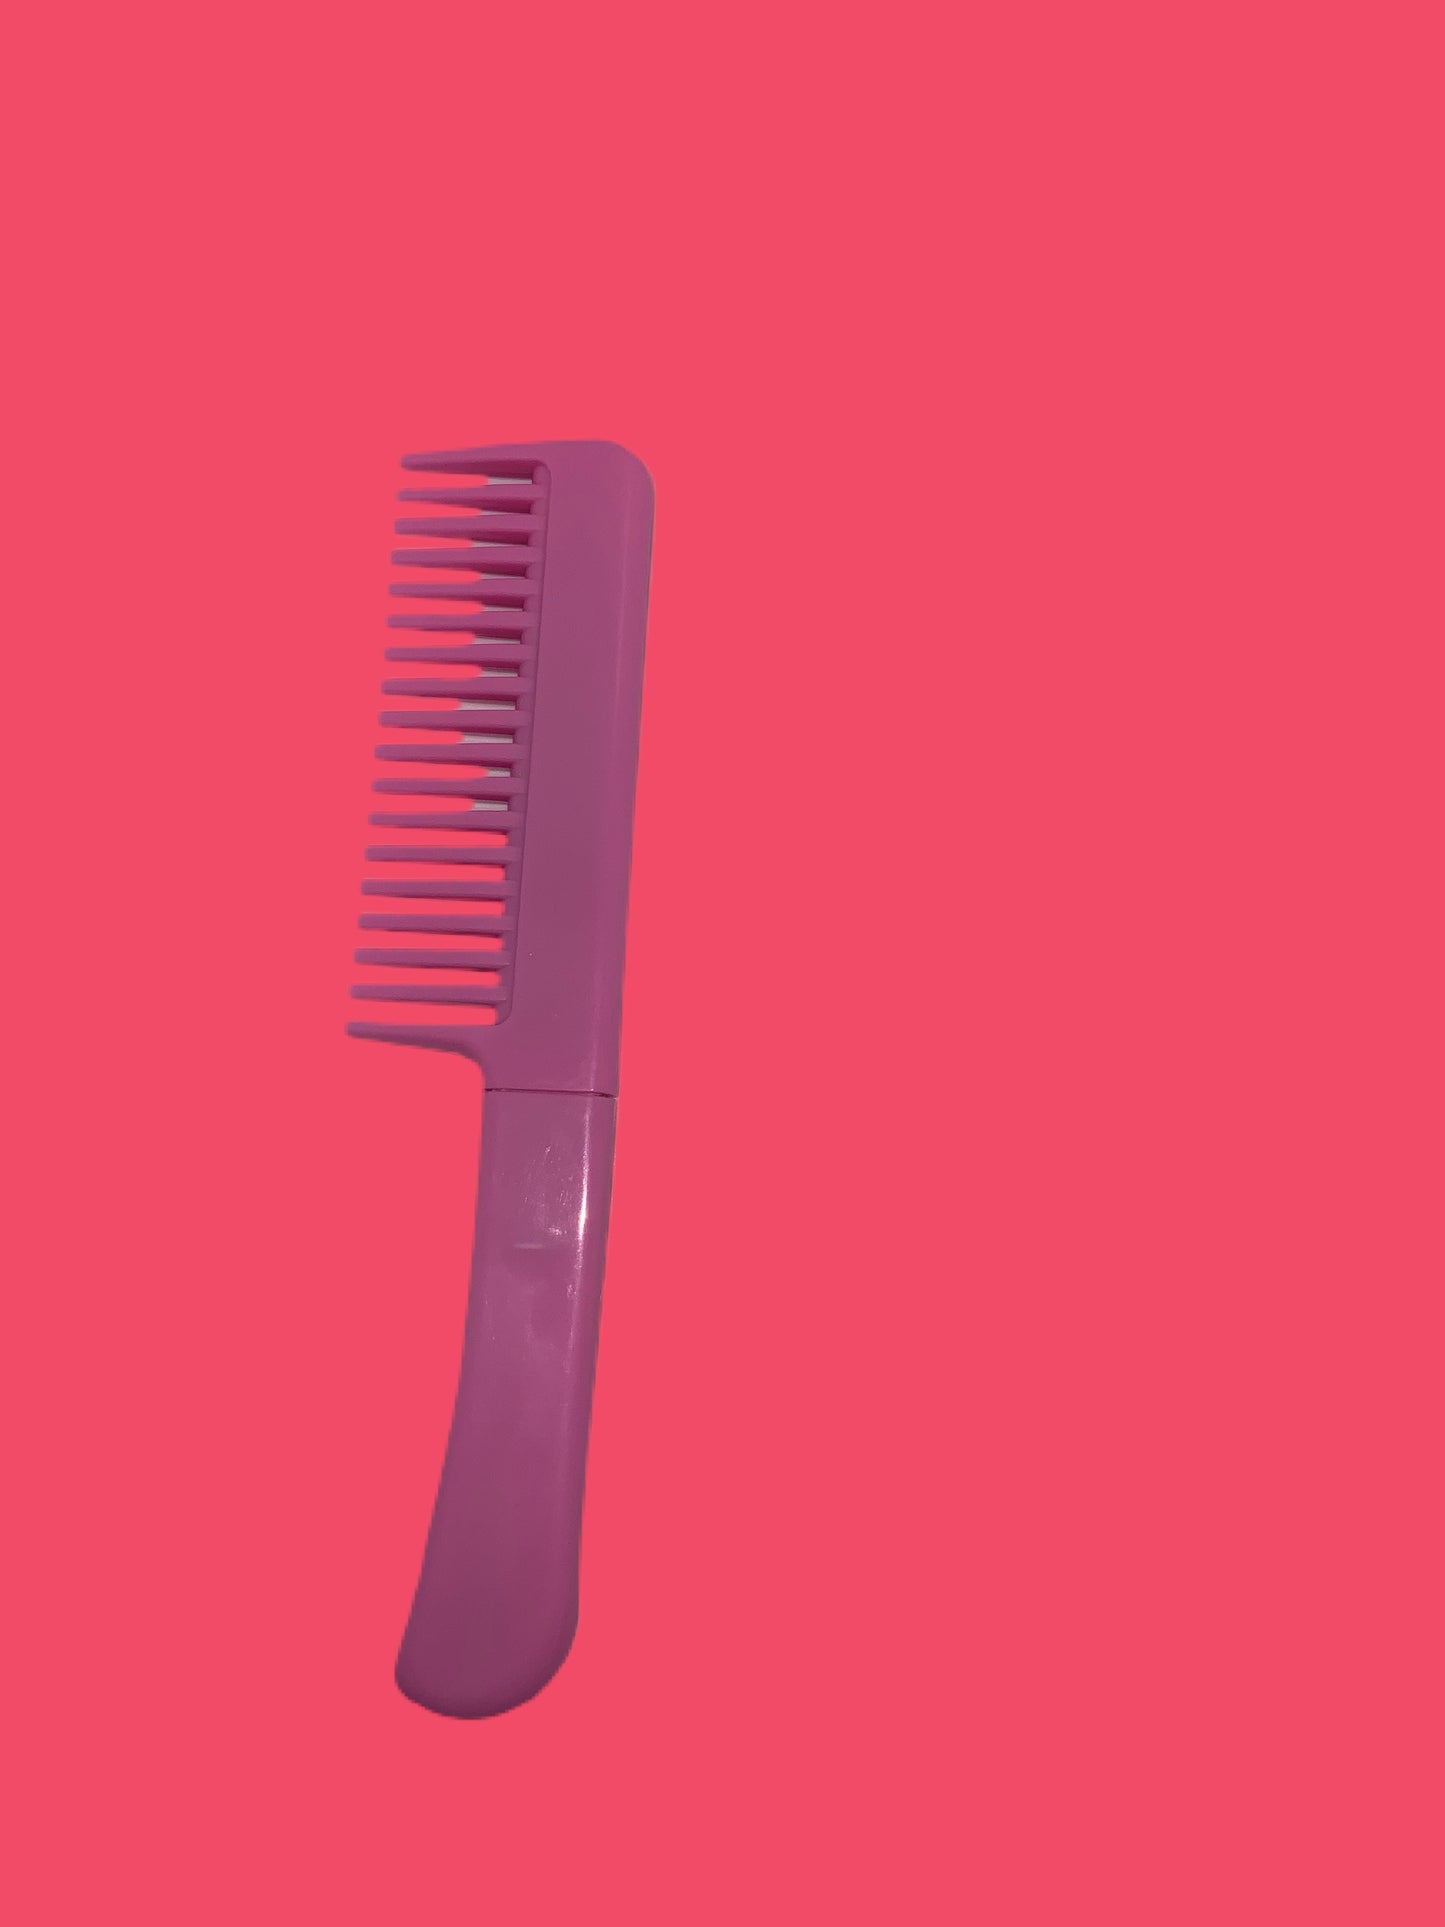 Comb knife